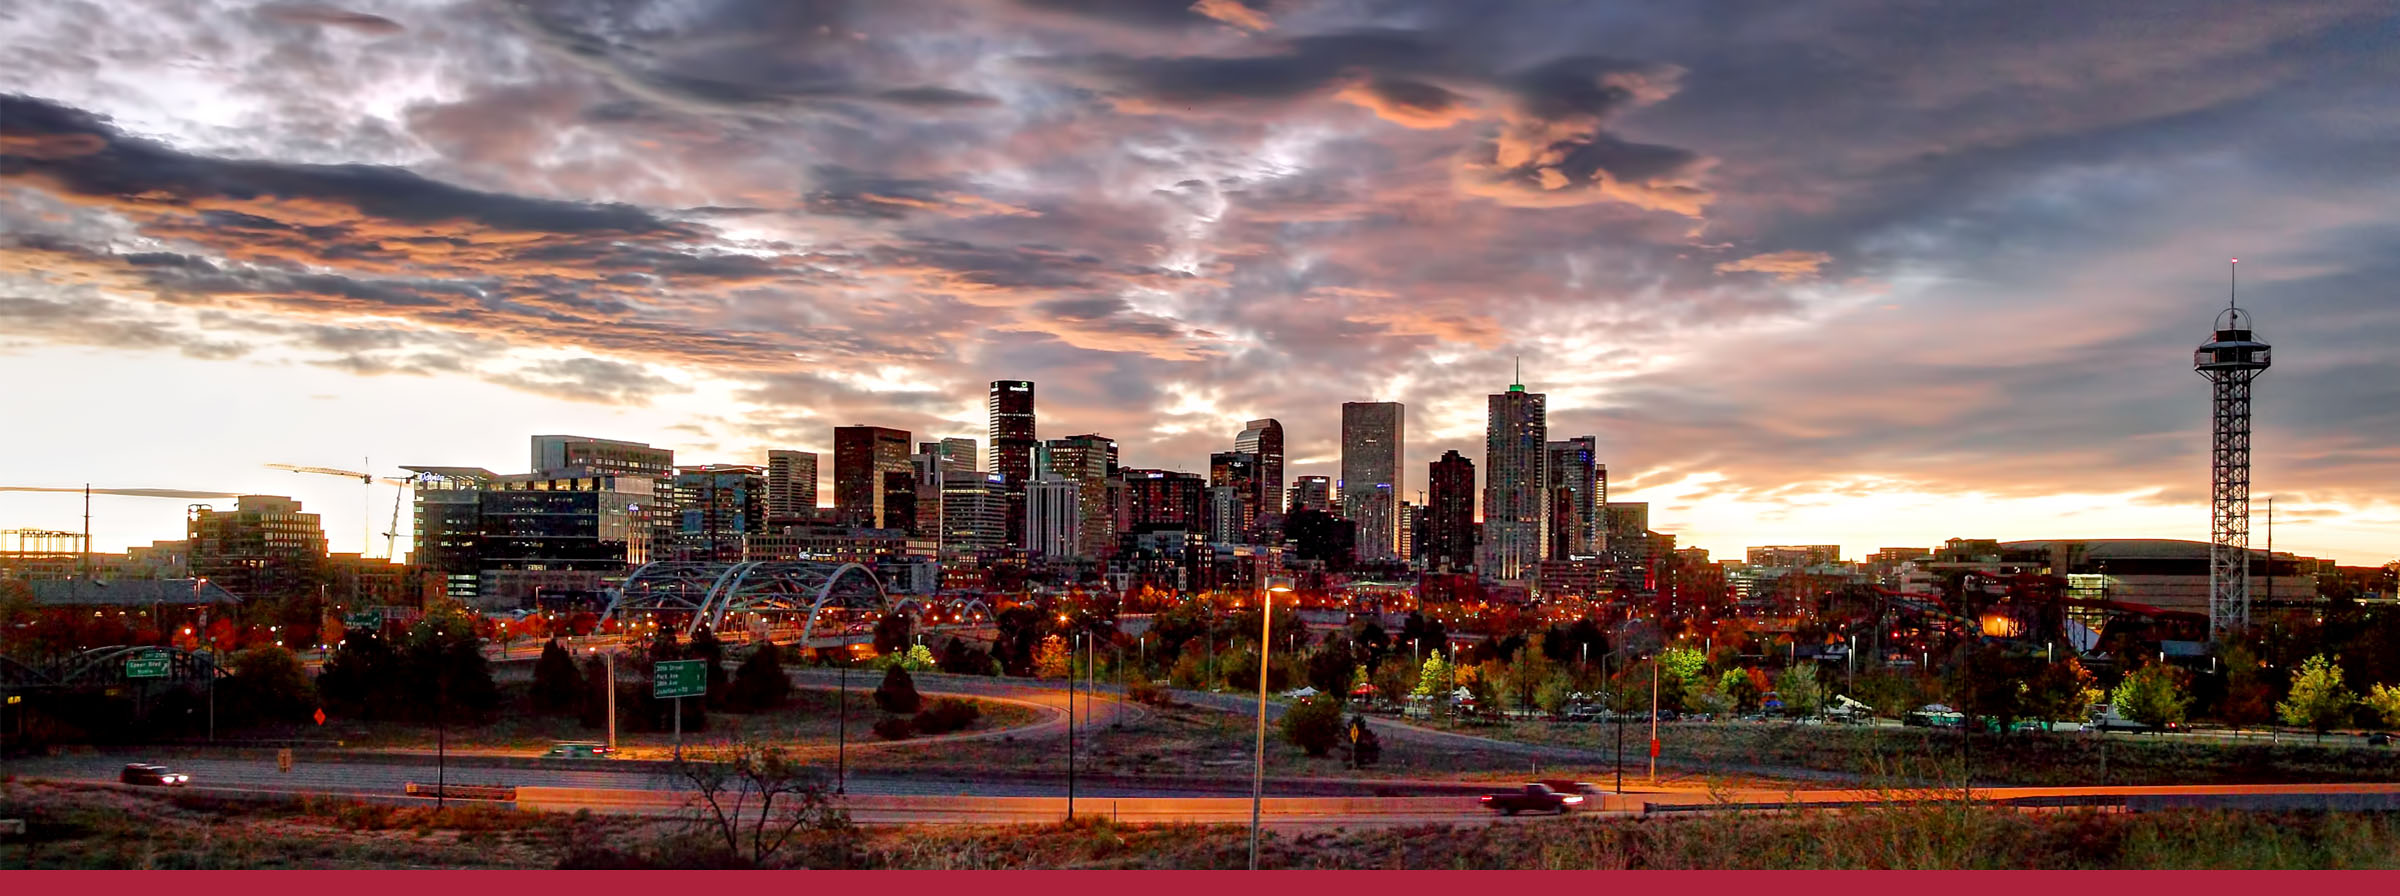 Denver's Best Photo Opportunities | VISIT DENVER